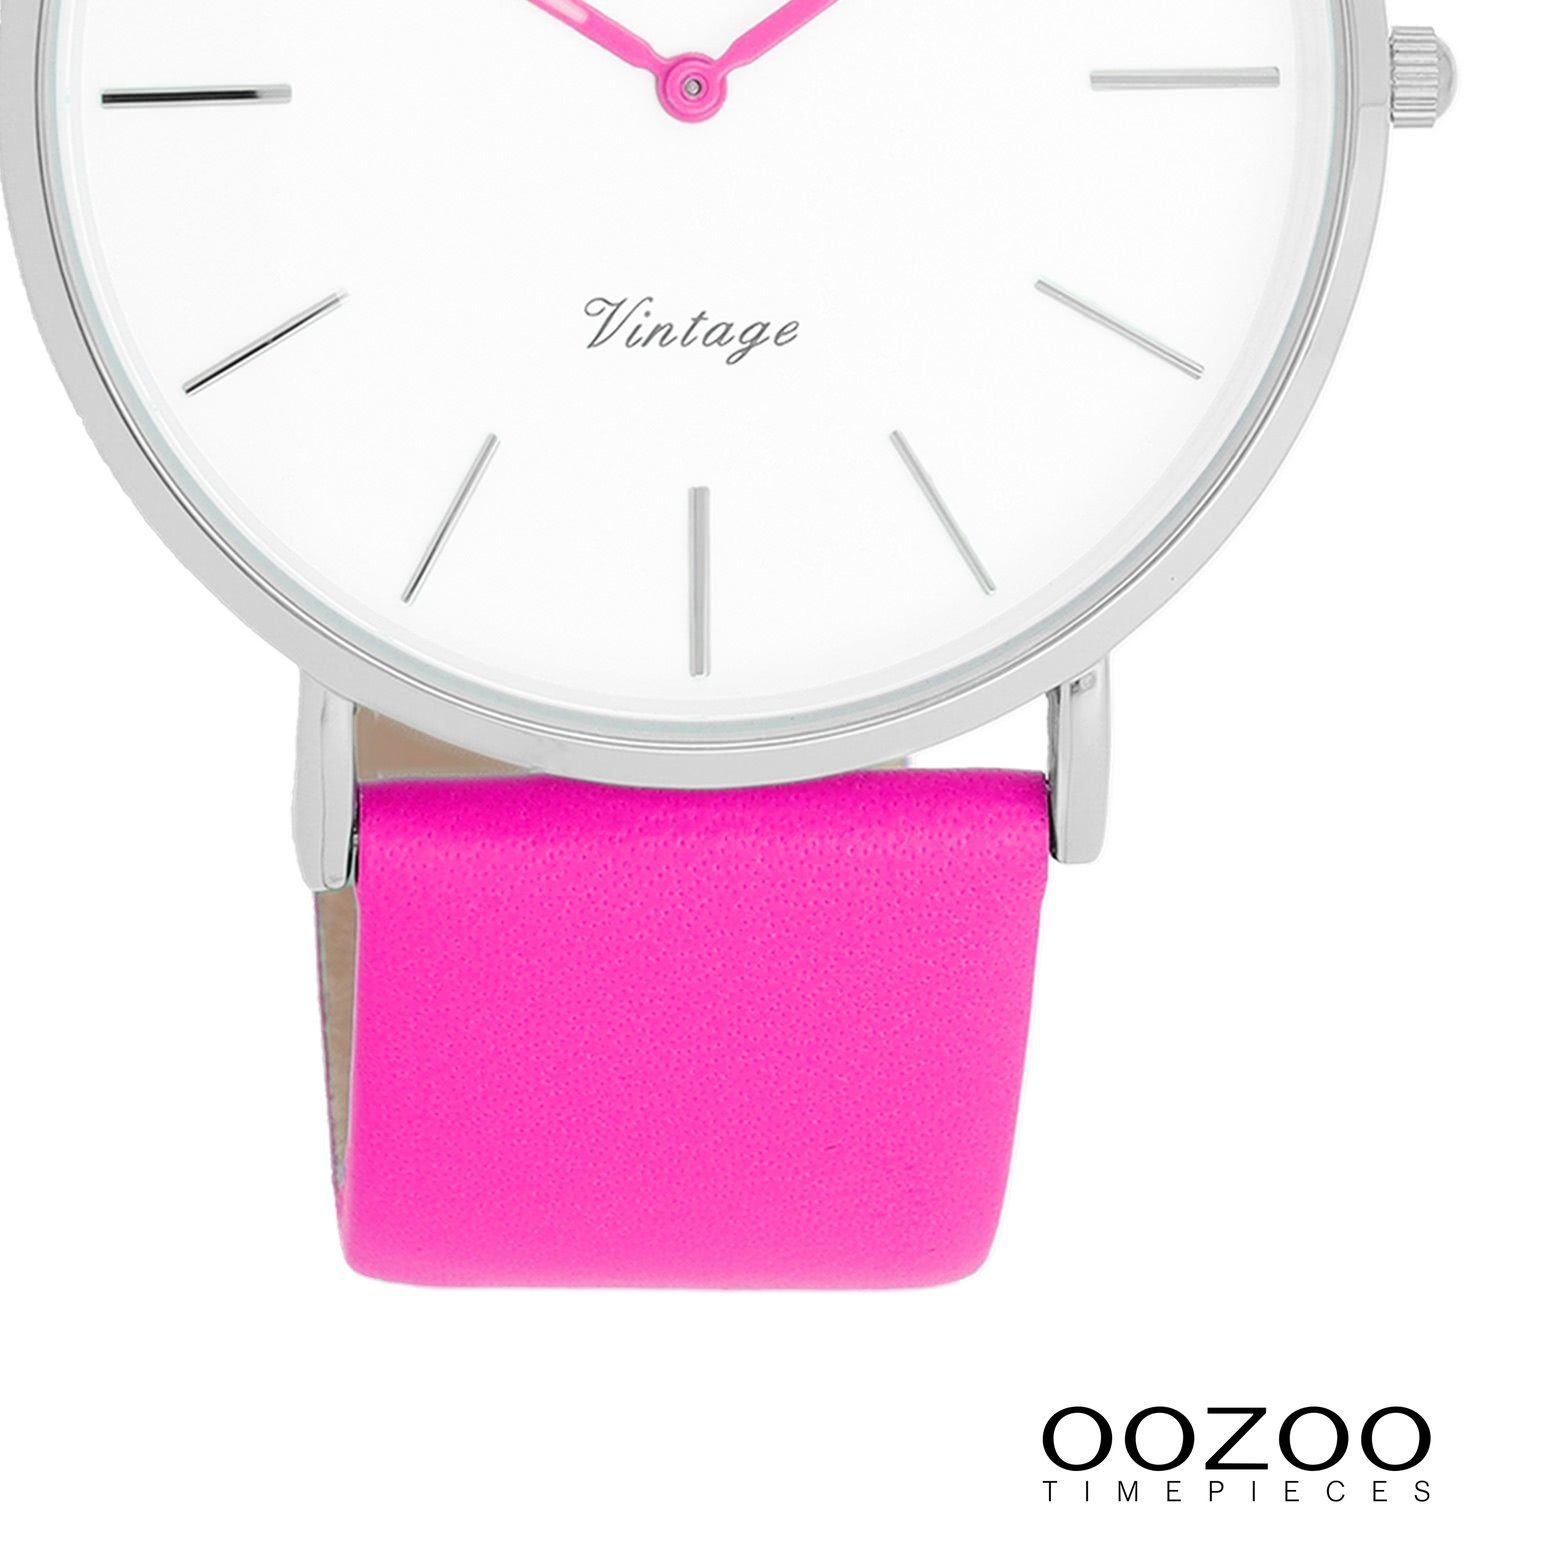 Fashion groß pink, Damen Armbanduhr OOZOO (ca. Lederarmband Series, Vintage rund, Damenuhr 40mm), Oozoo Quarzuhr